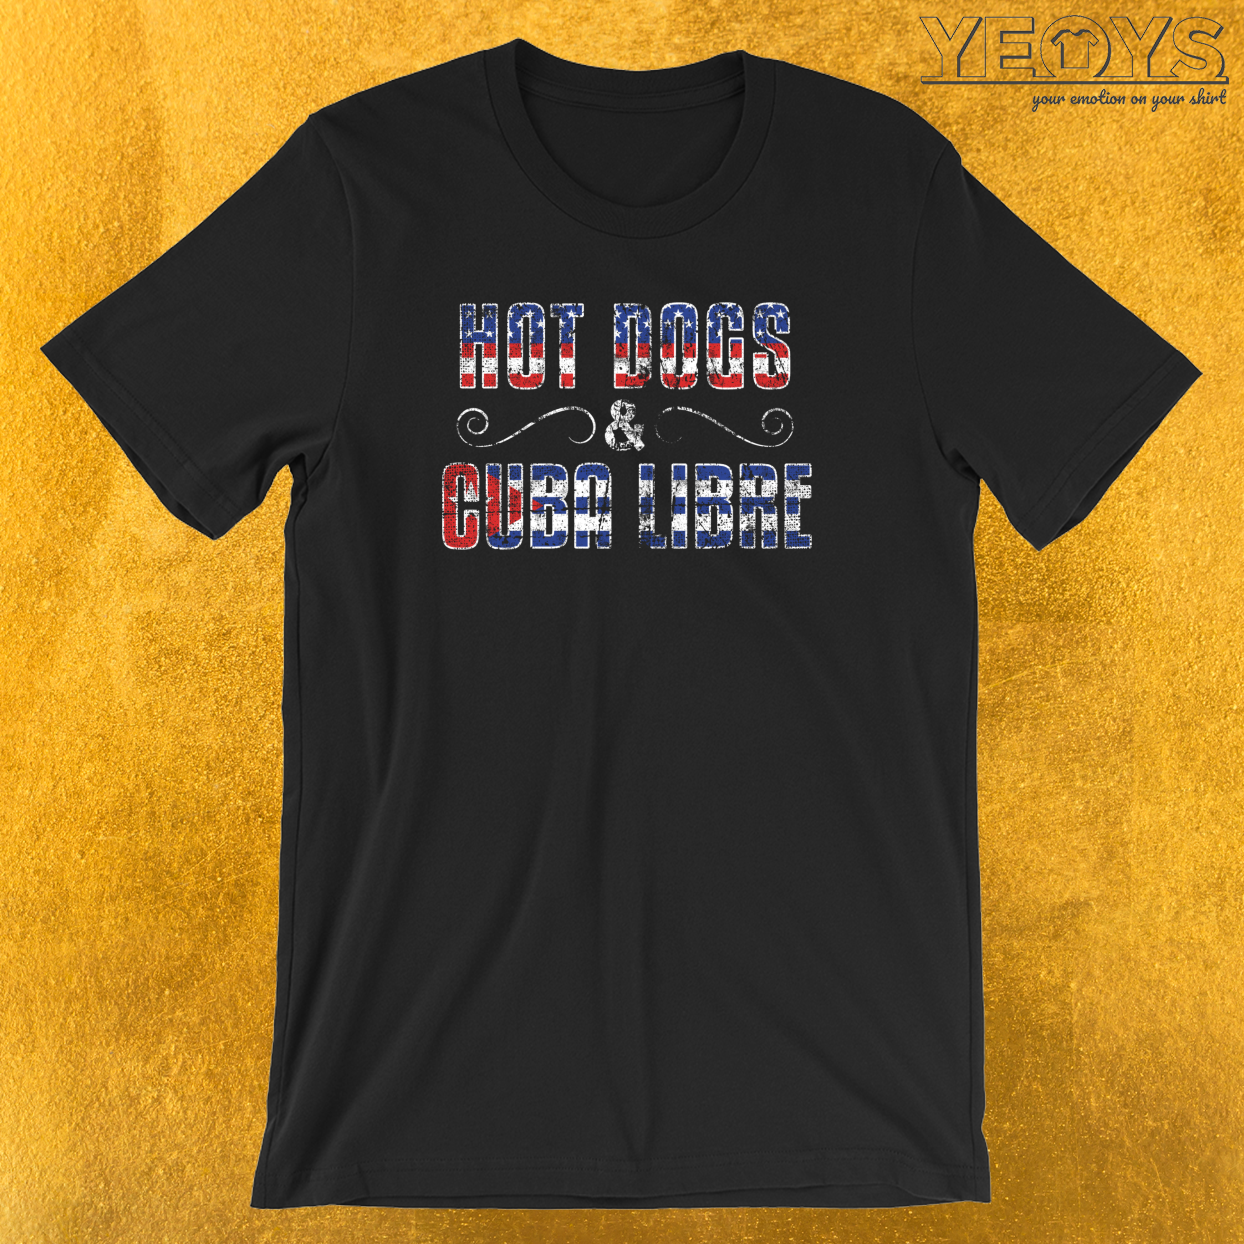 Hot Dogs & Cuba Libre USA Cuba T-Shirt